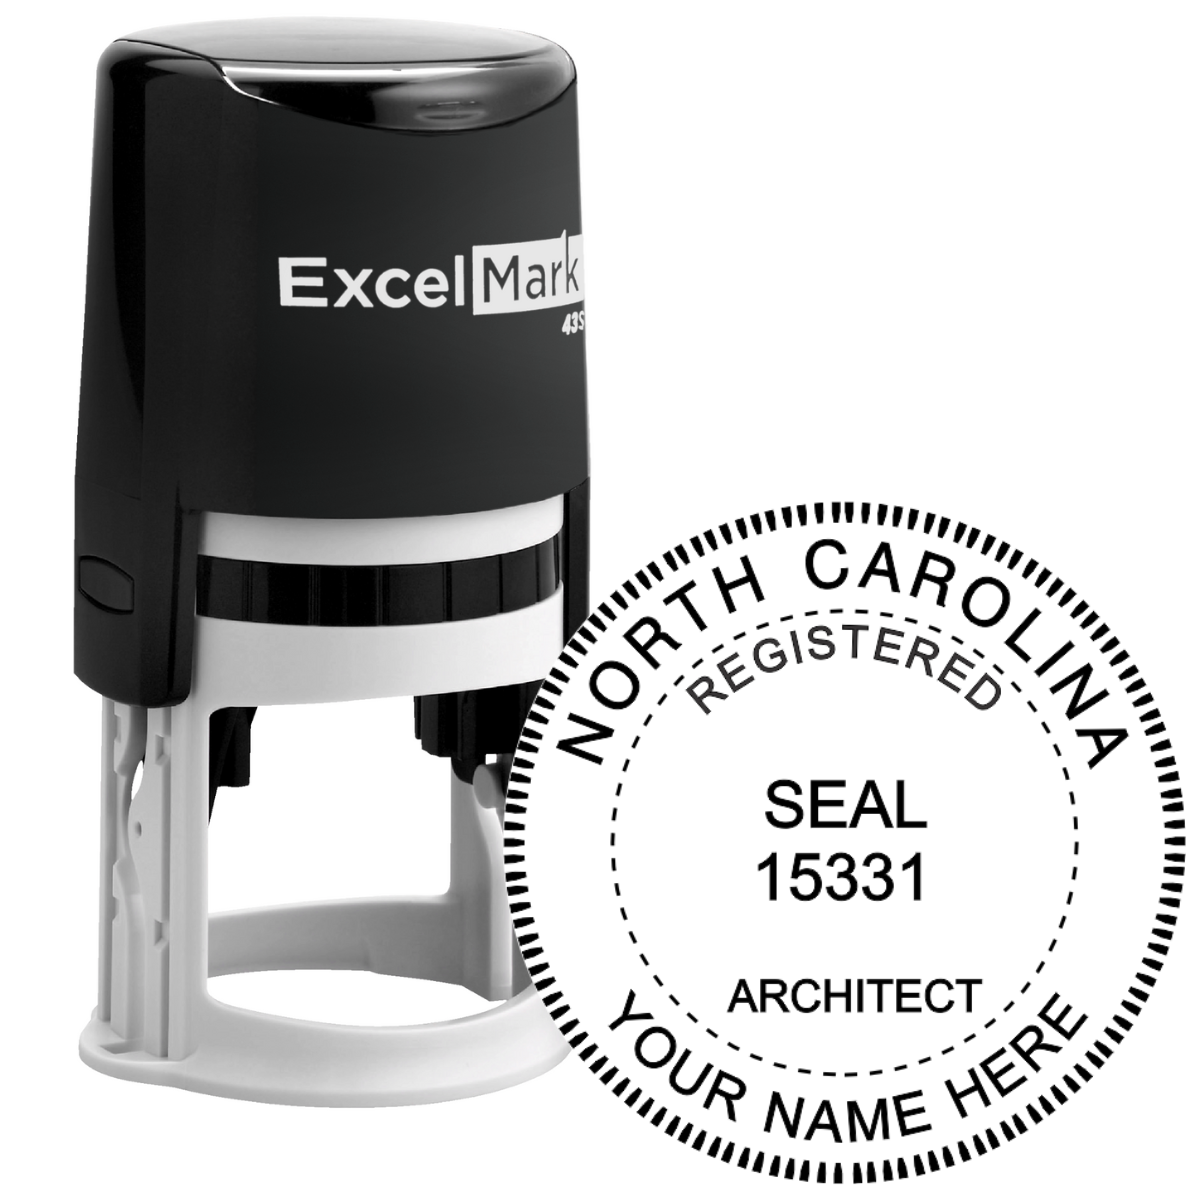 North Carolina Architect Seal Stamp